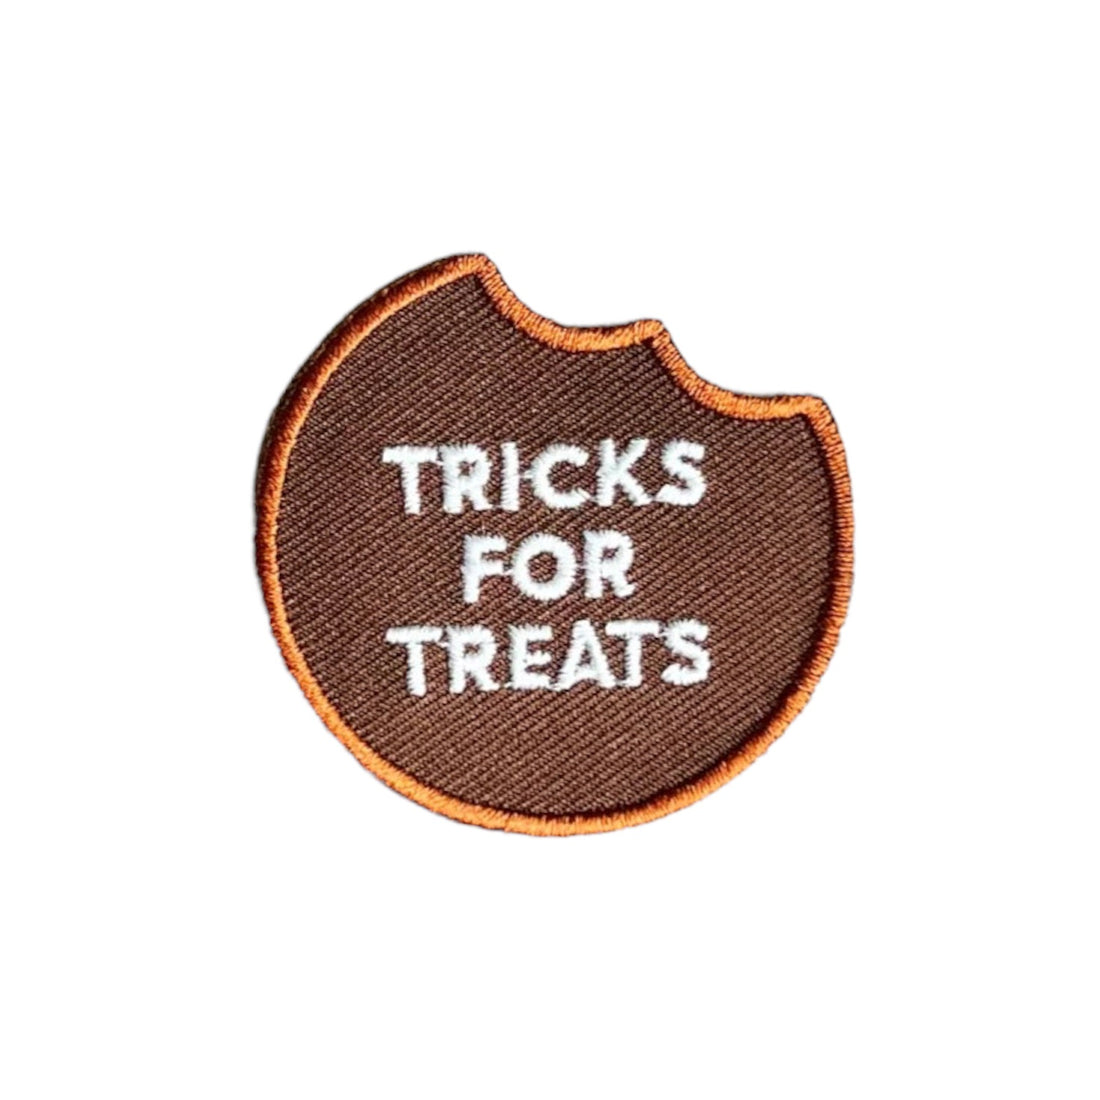 Tricks for Treats Badge